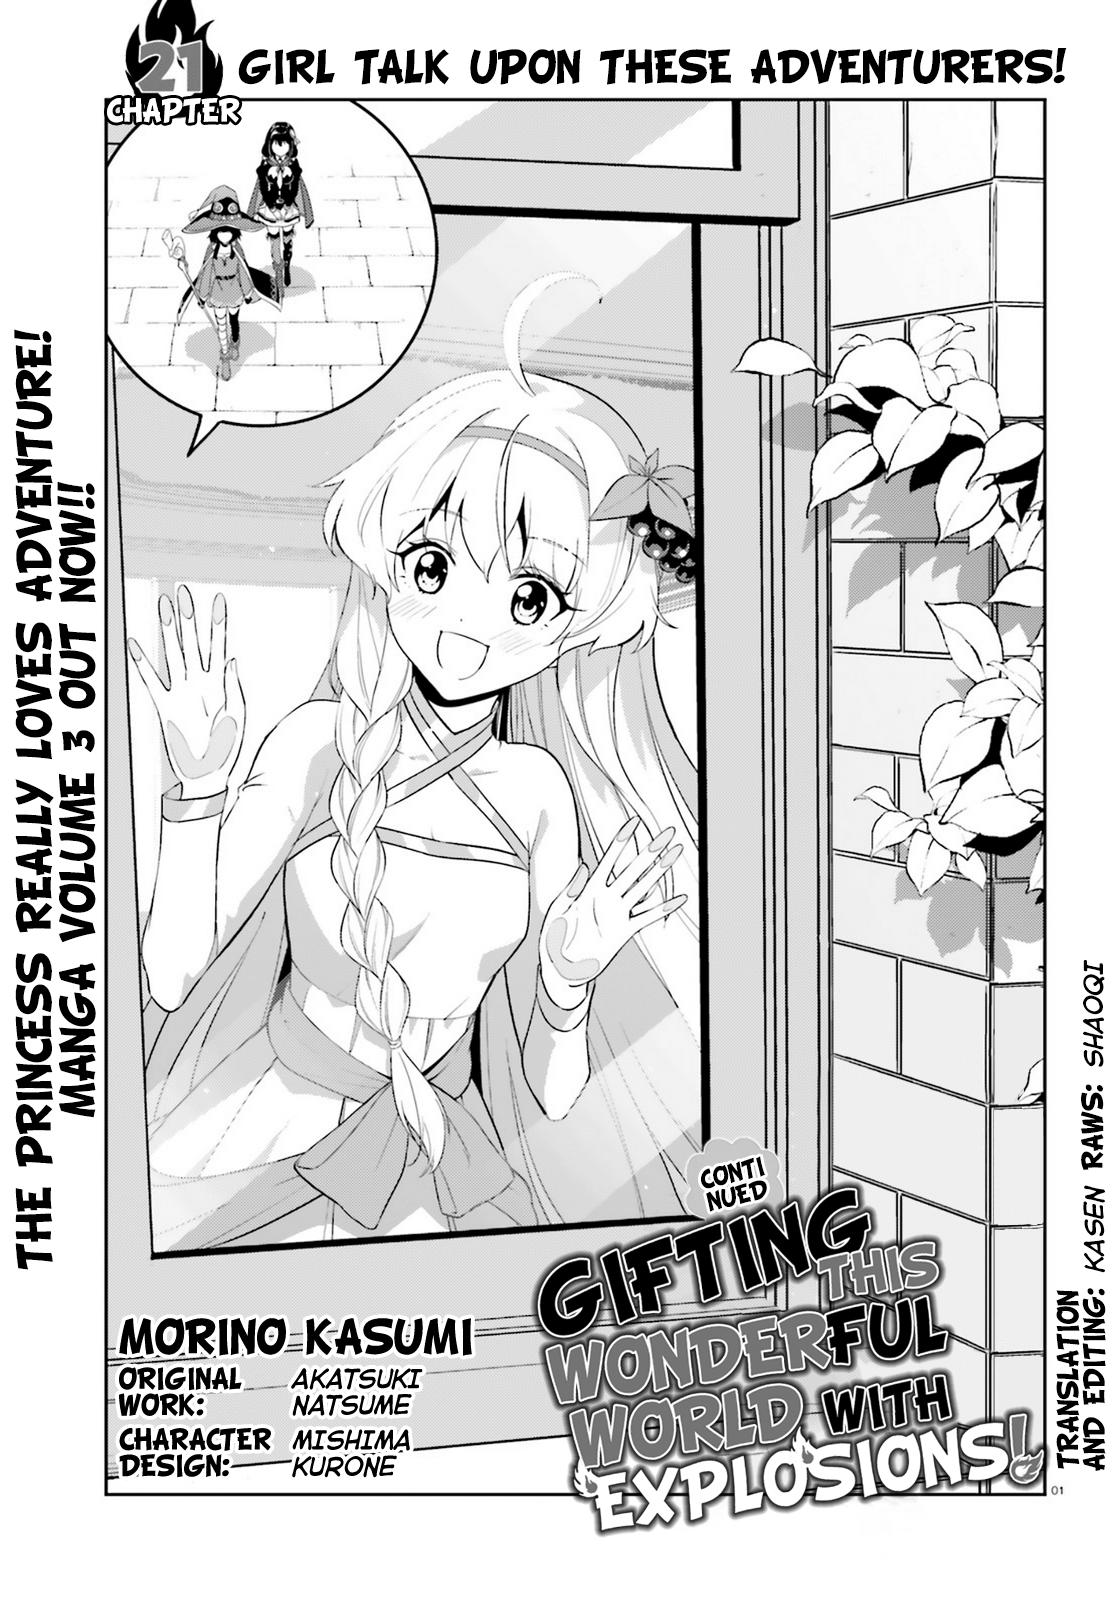 Kono Subarashii Sekai ni Bakuen wo! - KonoSuba: An Explosion on This Wonderful  World! - Animes Online